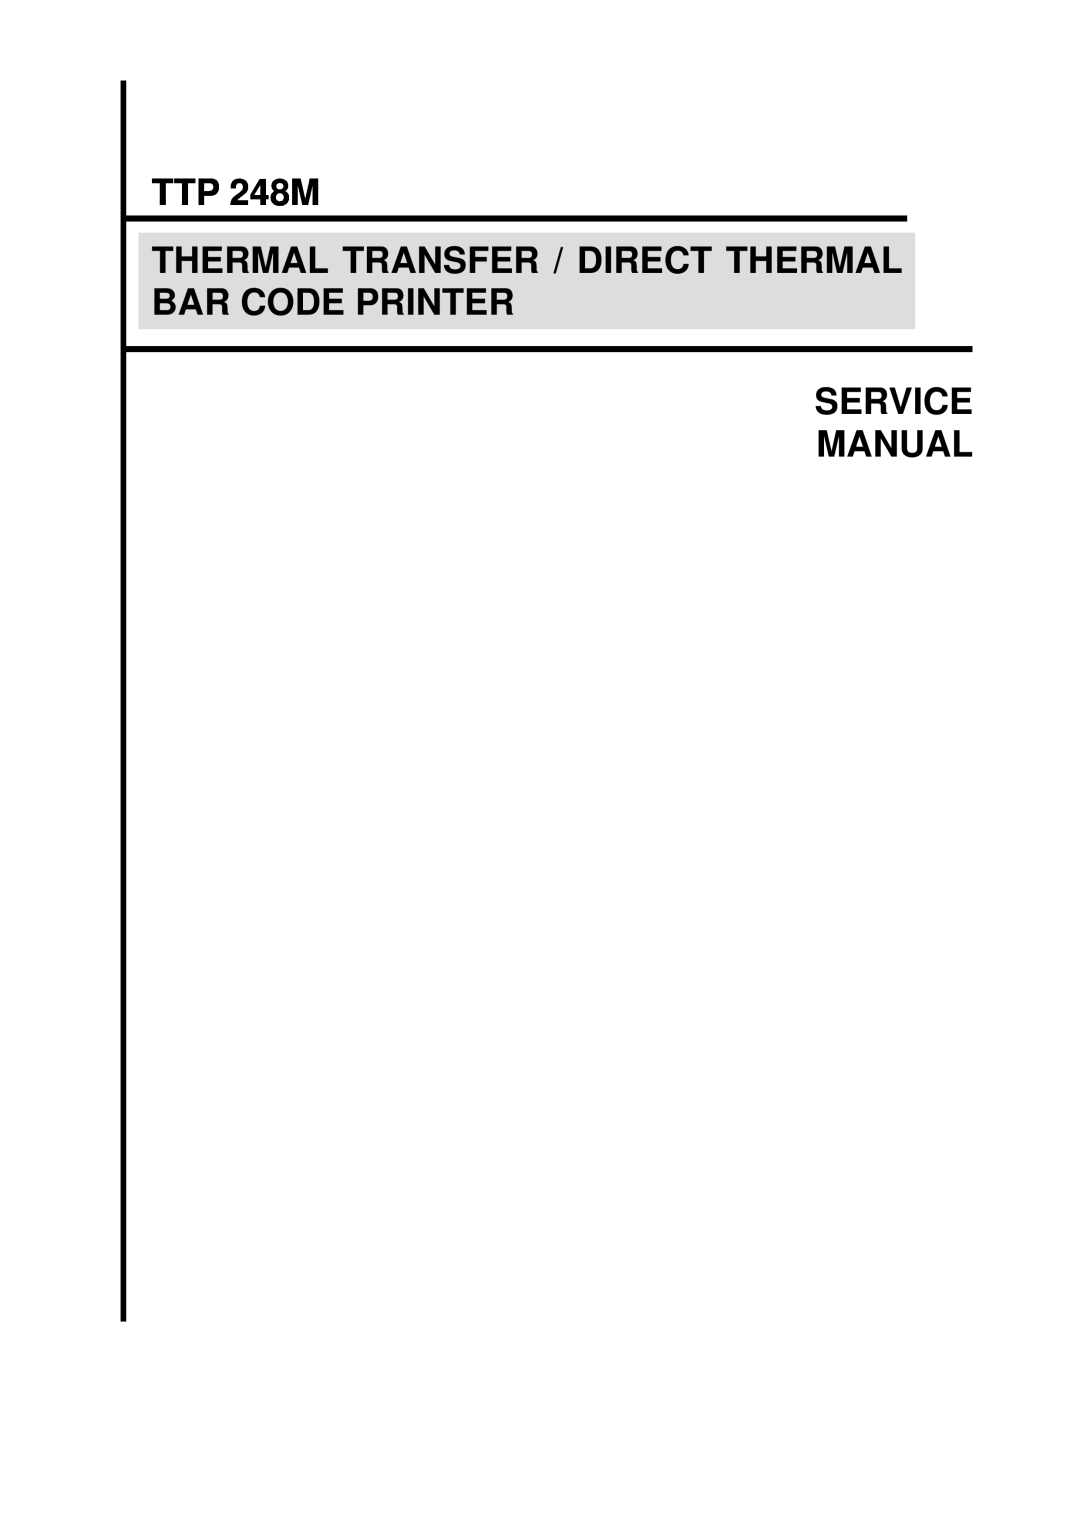 The Speaker Company service manual TTP 248M THERMAL TRANSFER / DIRECT THERMAL BAR CODE PRINTER SERVICE, Manual 